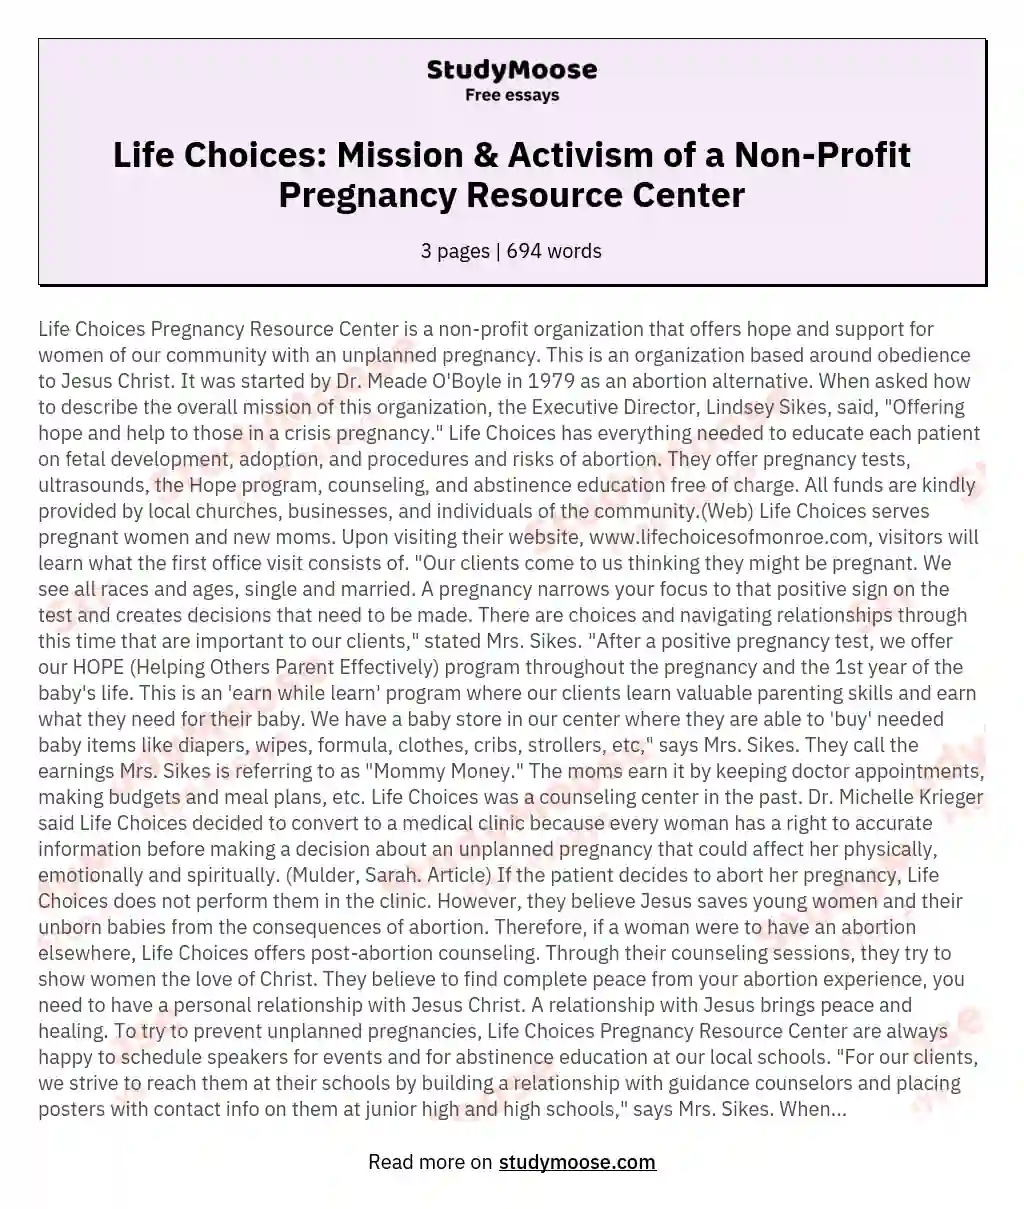 Life Choices: Mission & Activism of a Non-Profit Pregnancy Resource Center essay